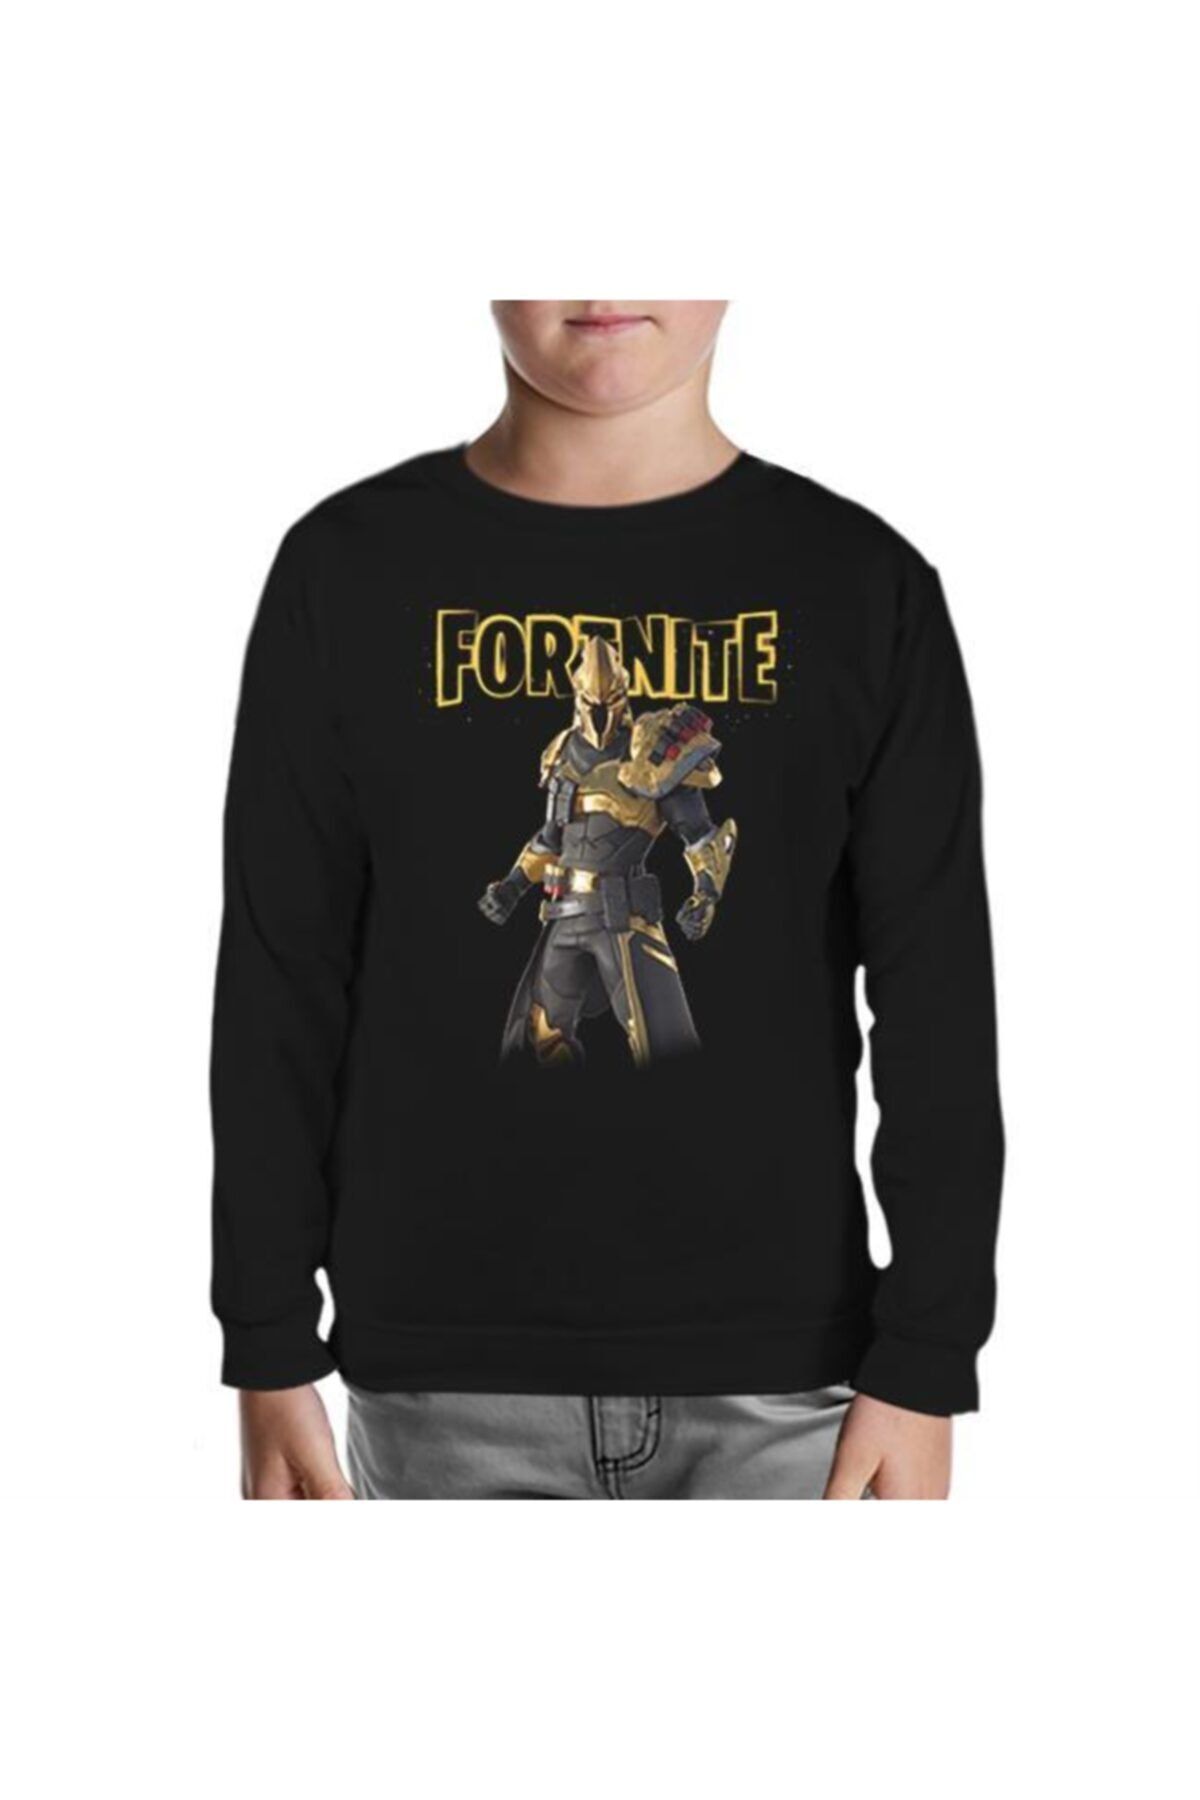 Lord T-Shirt Çocuk Siyah Fortnite - Ultima Knight Baskılı Sweatshirt